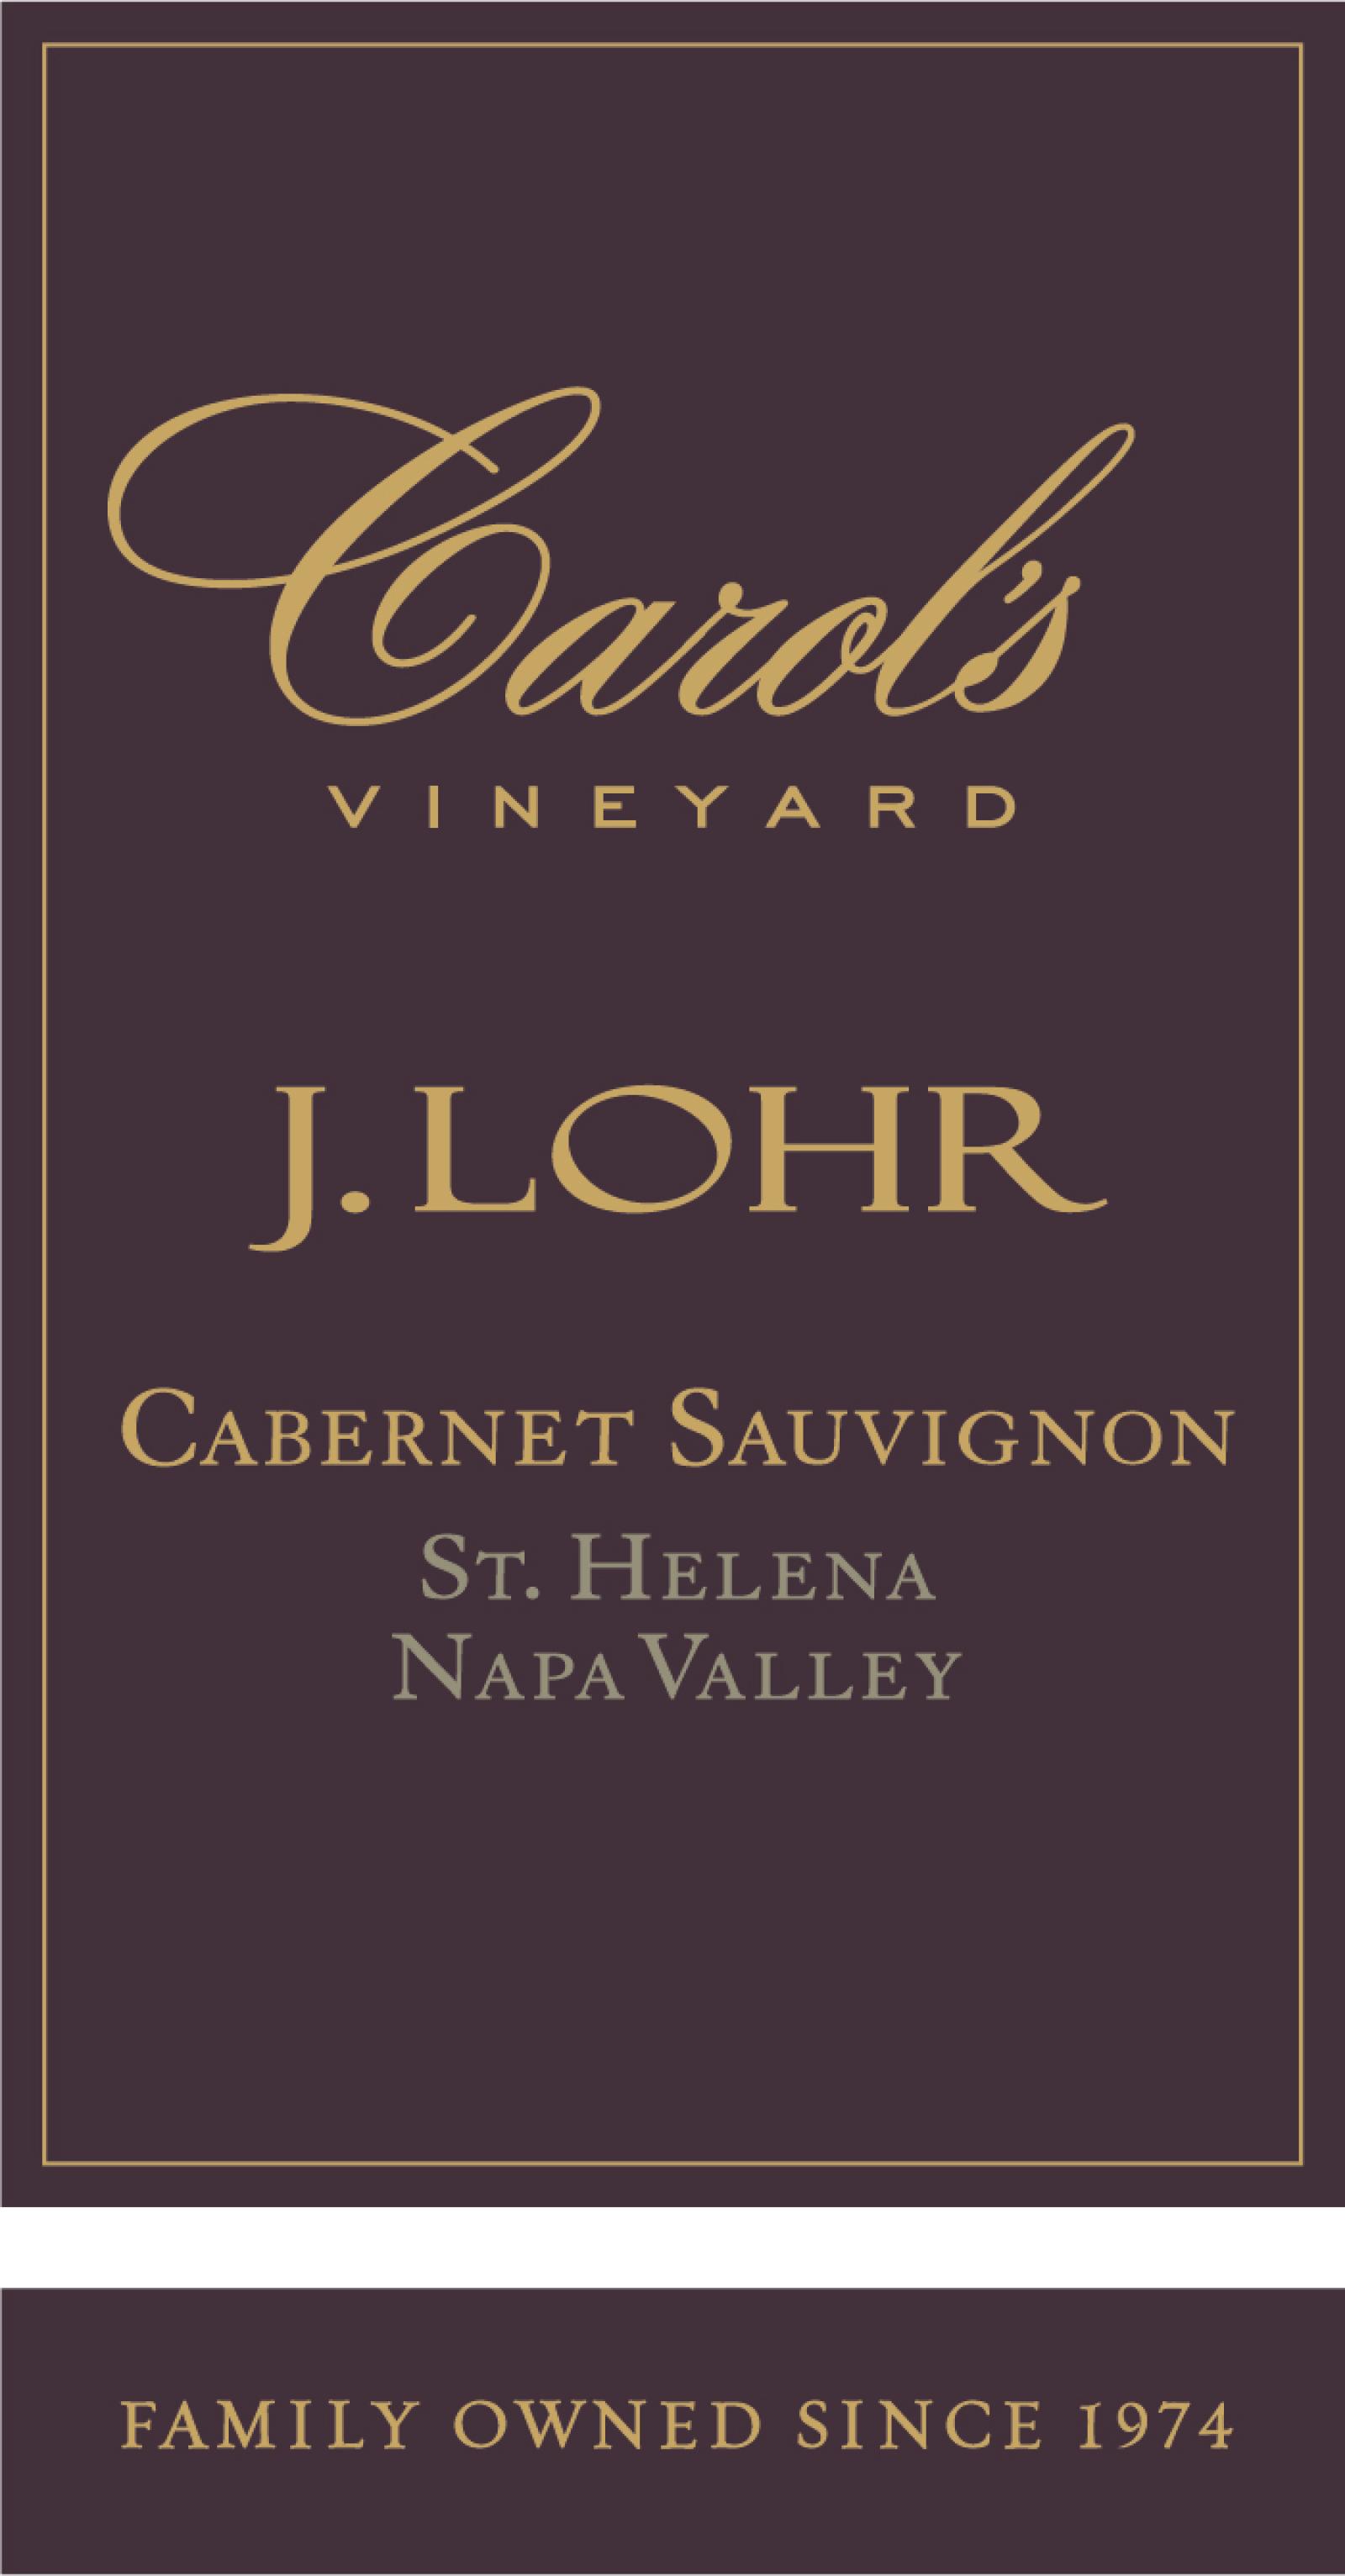 J Lohr Carol's Vineyard Cabernet Sauvignon 2019